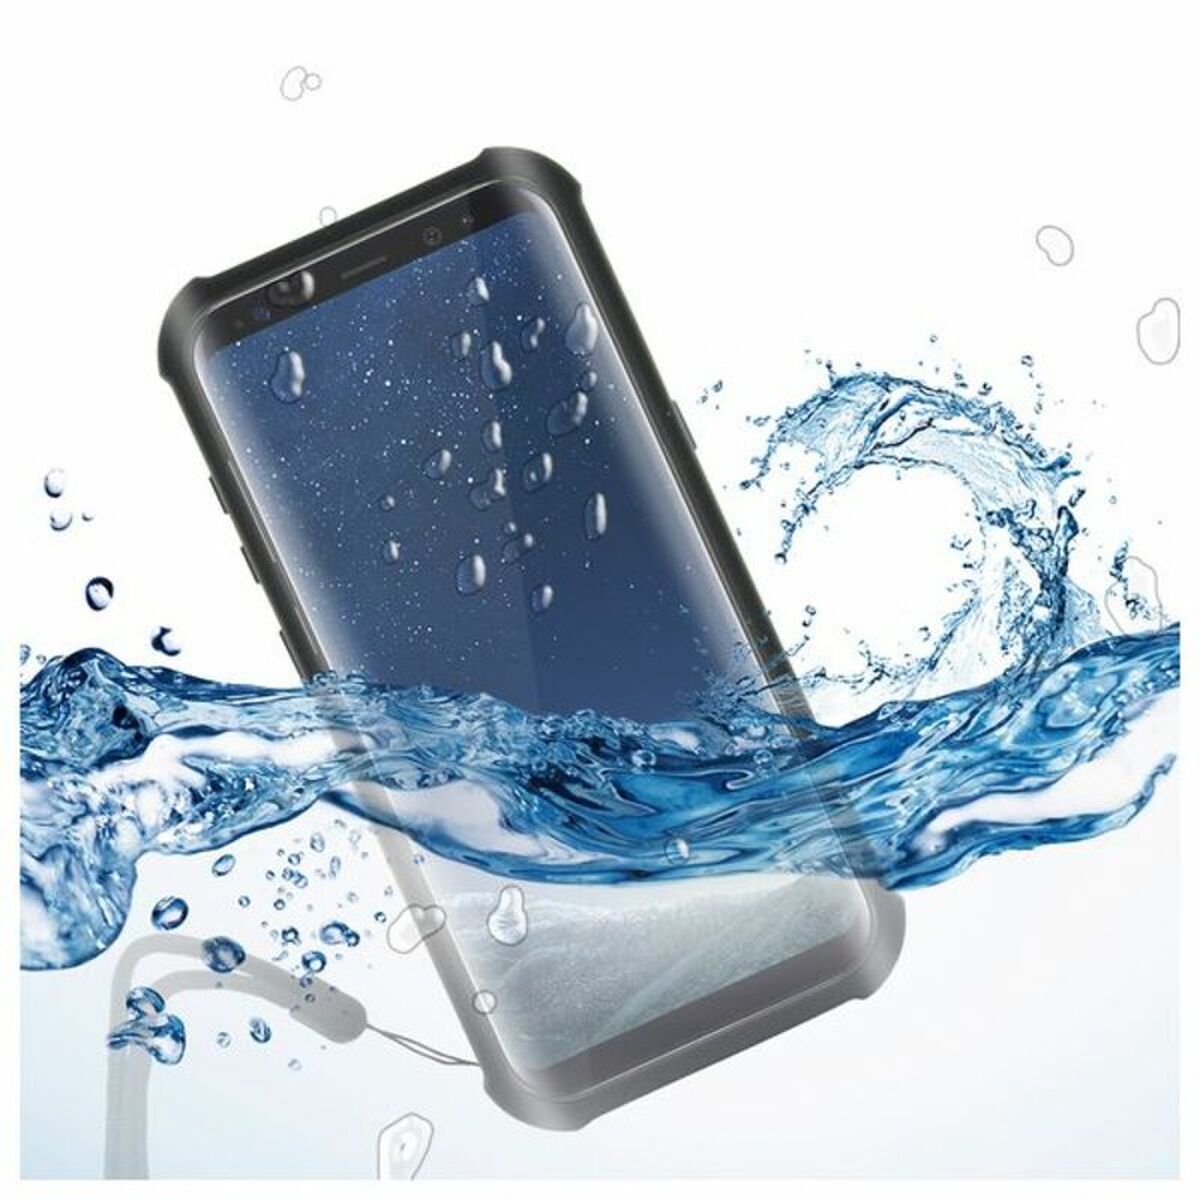 Husă Acvatică Samsung Galaxy S8 Aqua Case Negru Transparent